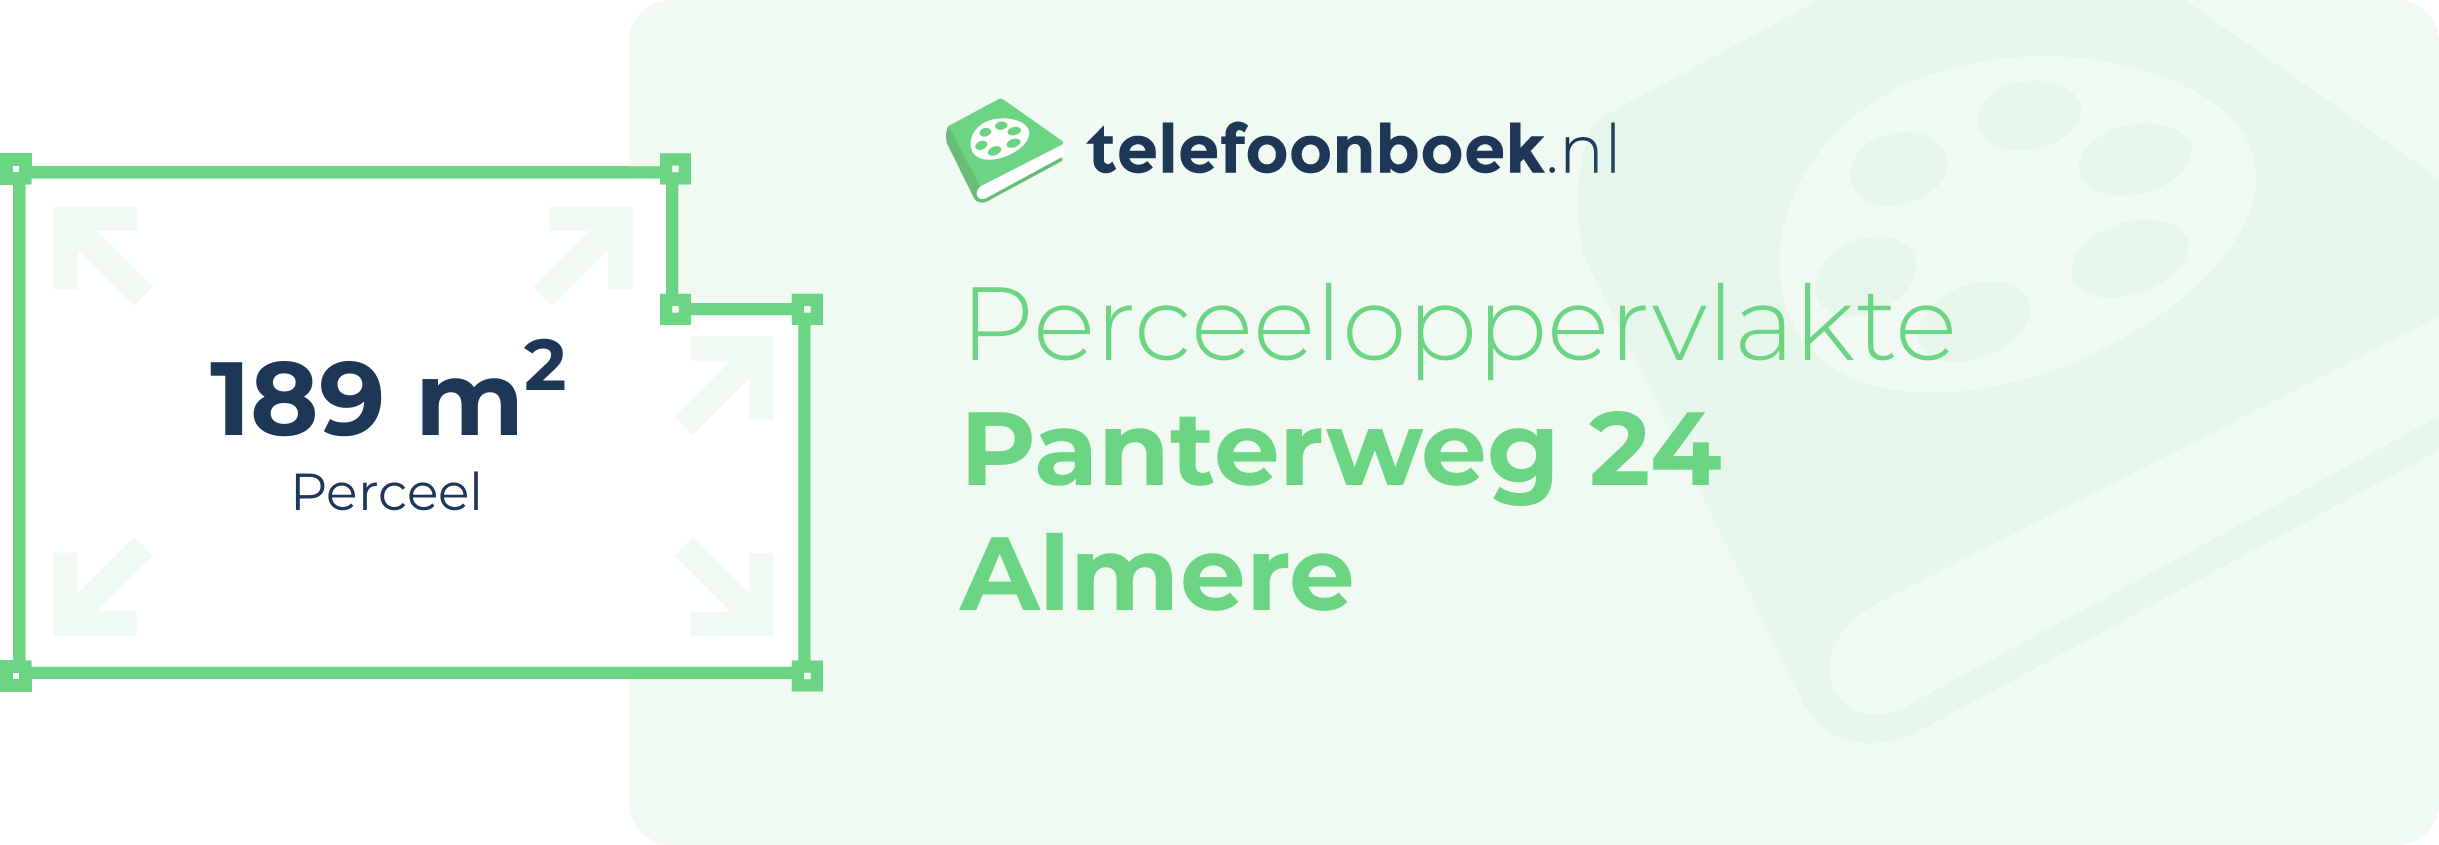 Perceeloppervlakte Panterweg 24 Almere